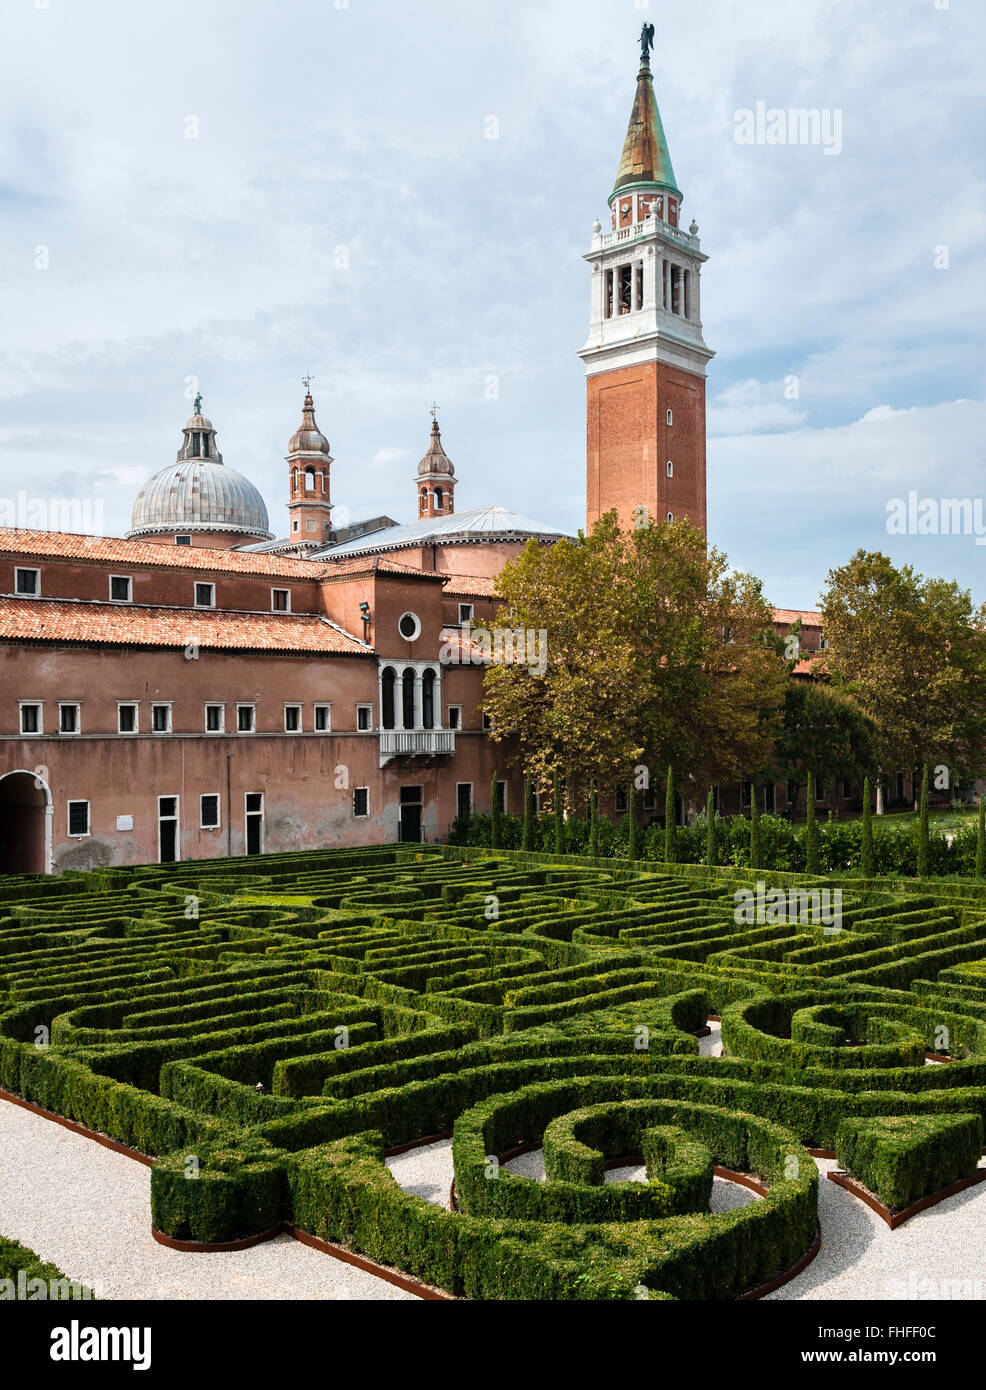 Venise, Italie. Monastère de San Giorgio Maggiore, maintenant la Fondazione Giorgio Cini. Le Labyrinthe de Borges (2011) par Randoll Coate Banque D'Images